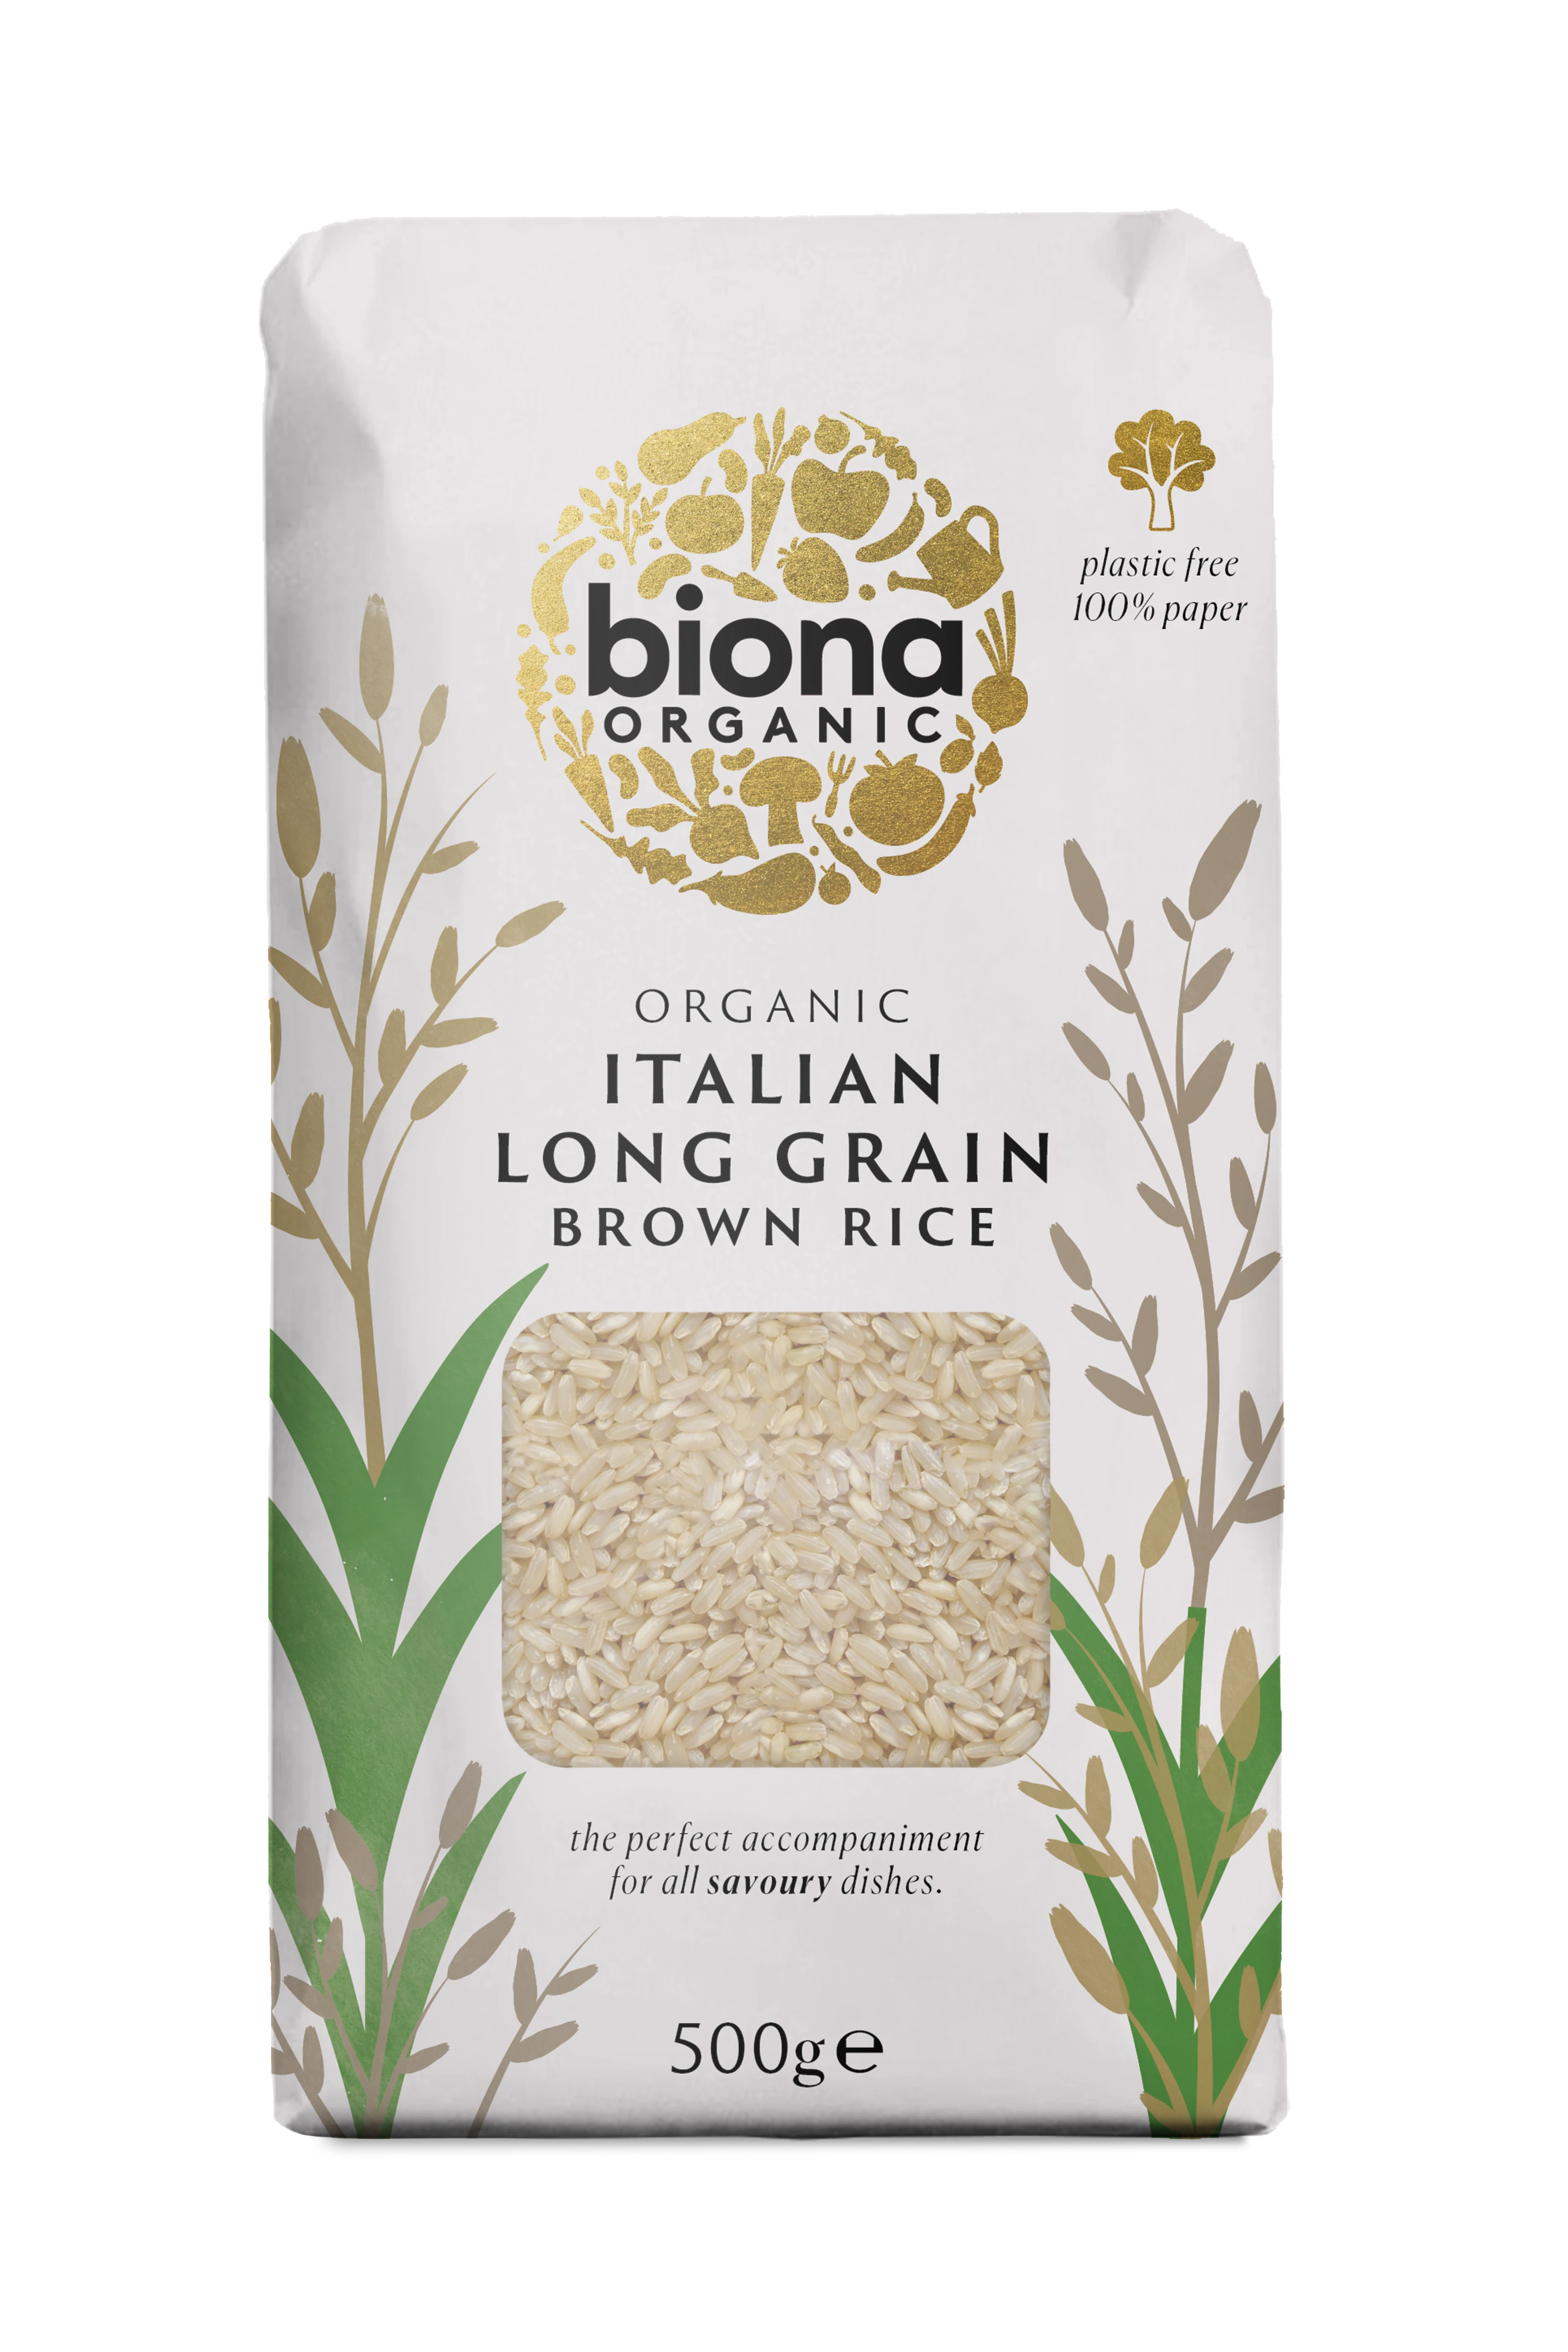 Biona Long Grain Italian Brown Rice Organic 500g